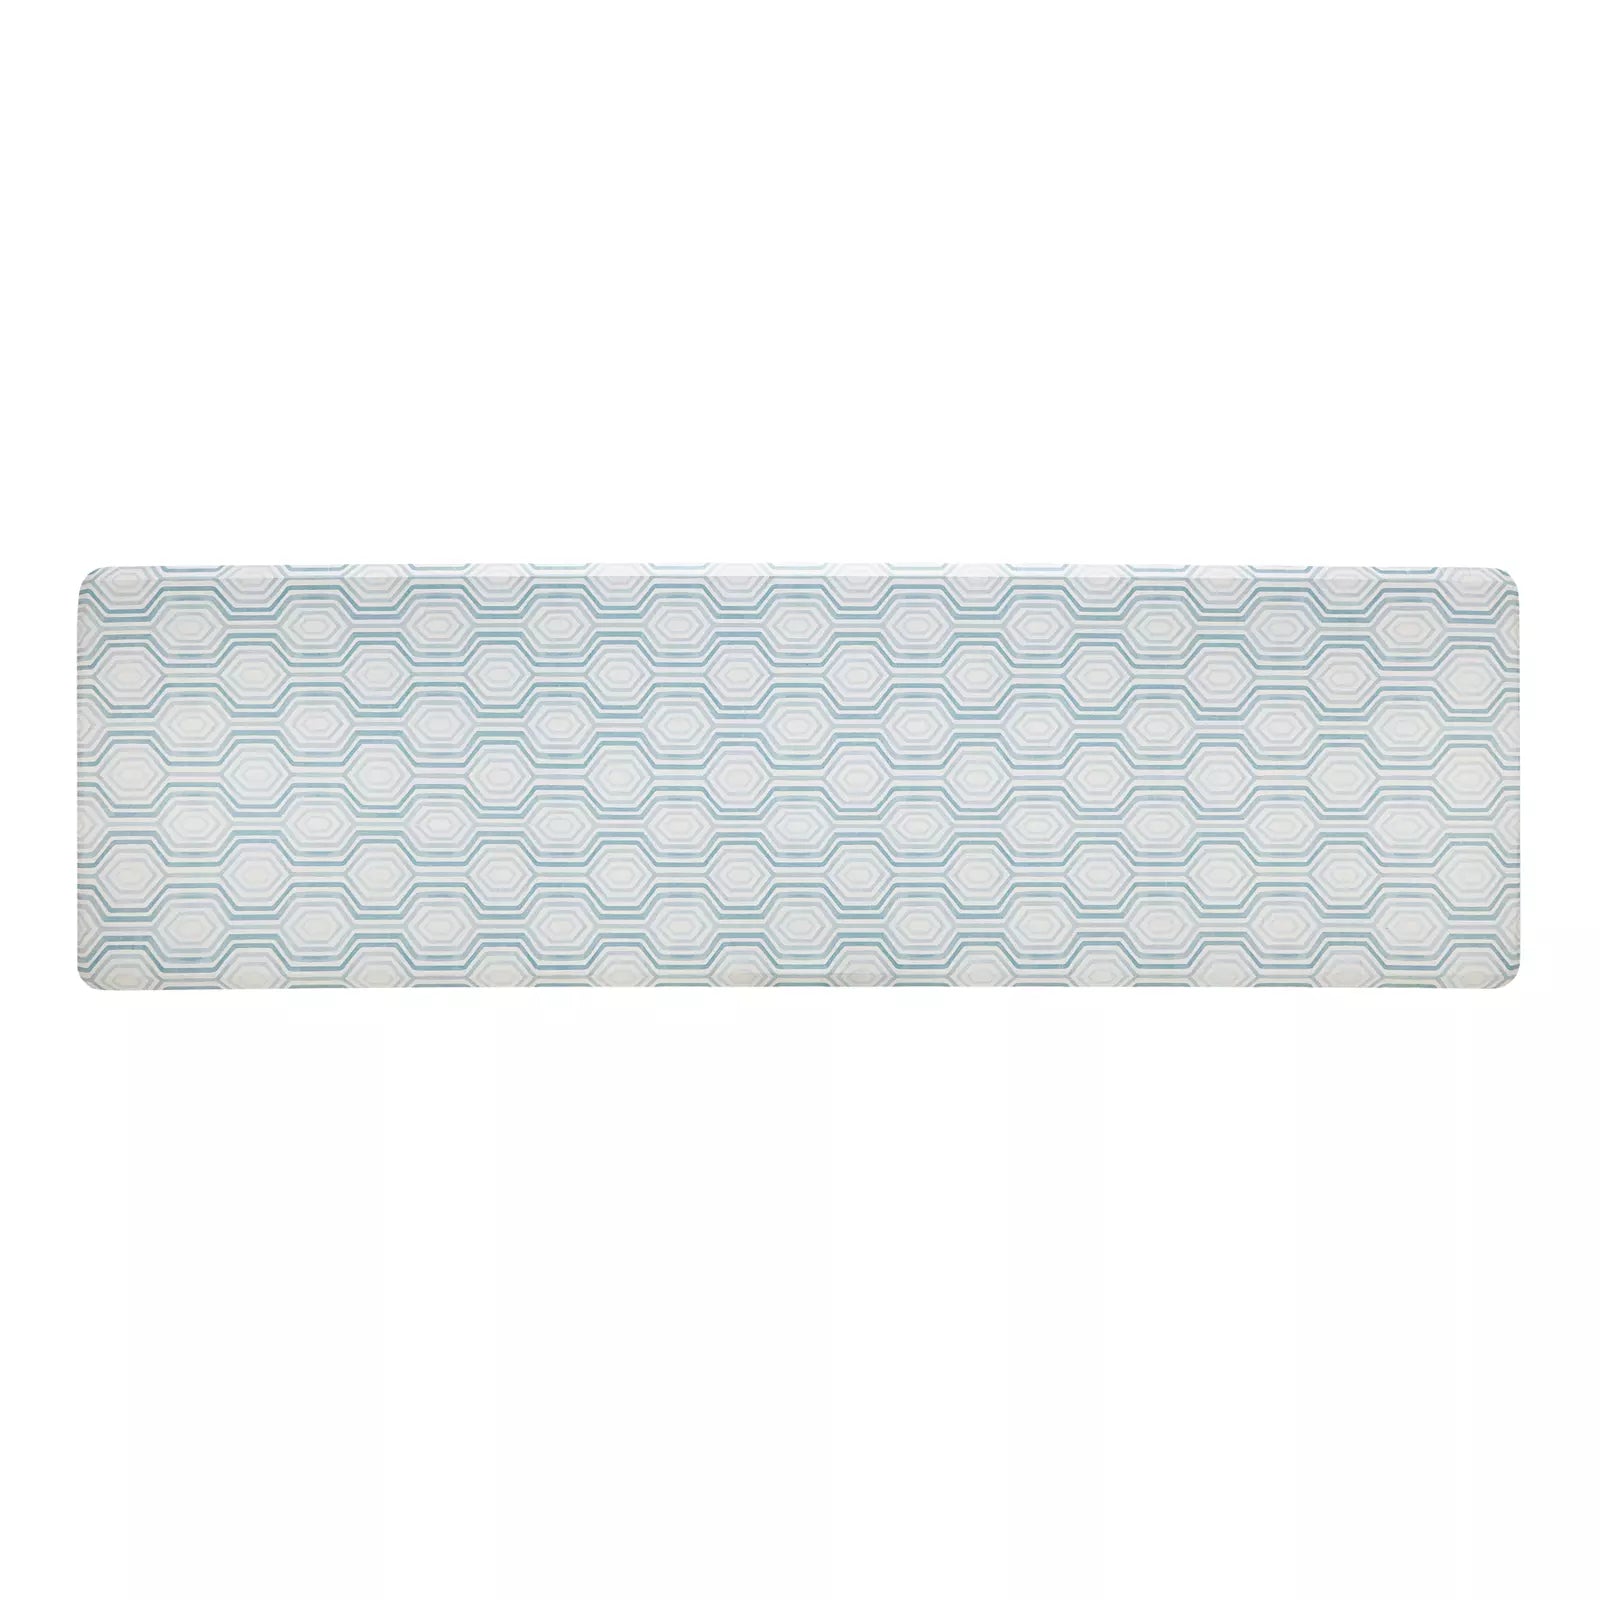 Blake waves blue and white mod preppy geometric print kitchen mat shown in size 30x108